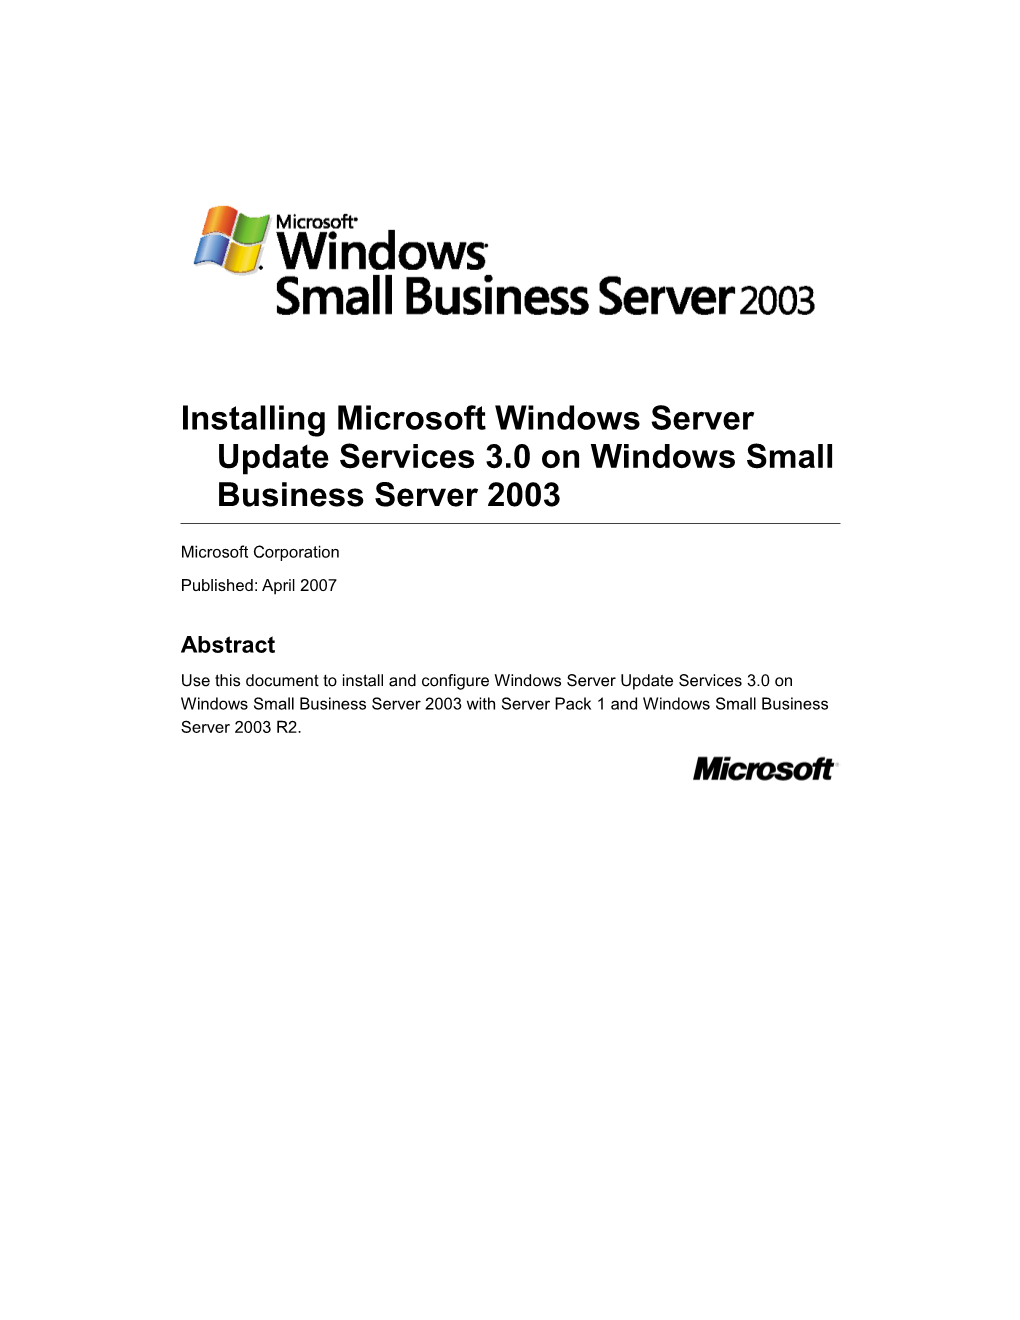 Installing Microsoft Windows Server Update Services 3.0 on Windows Small Business Server 2003